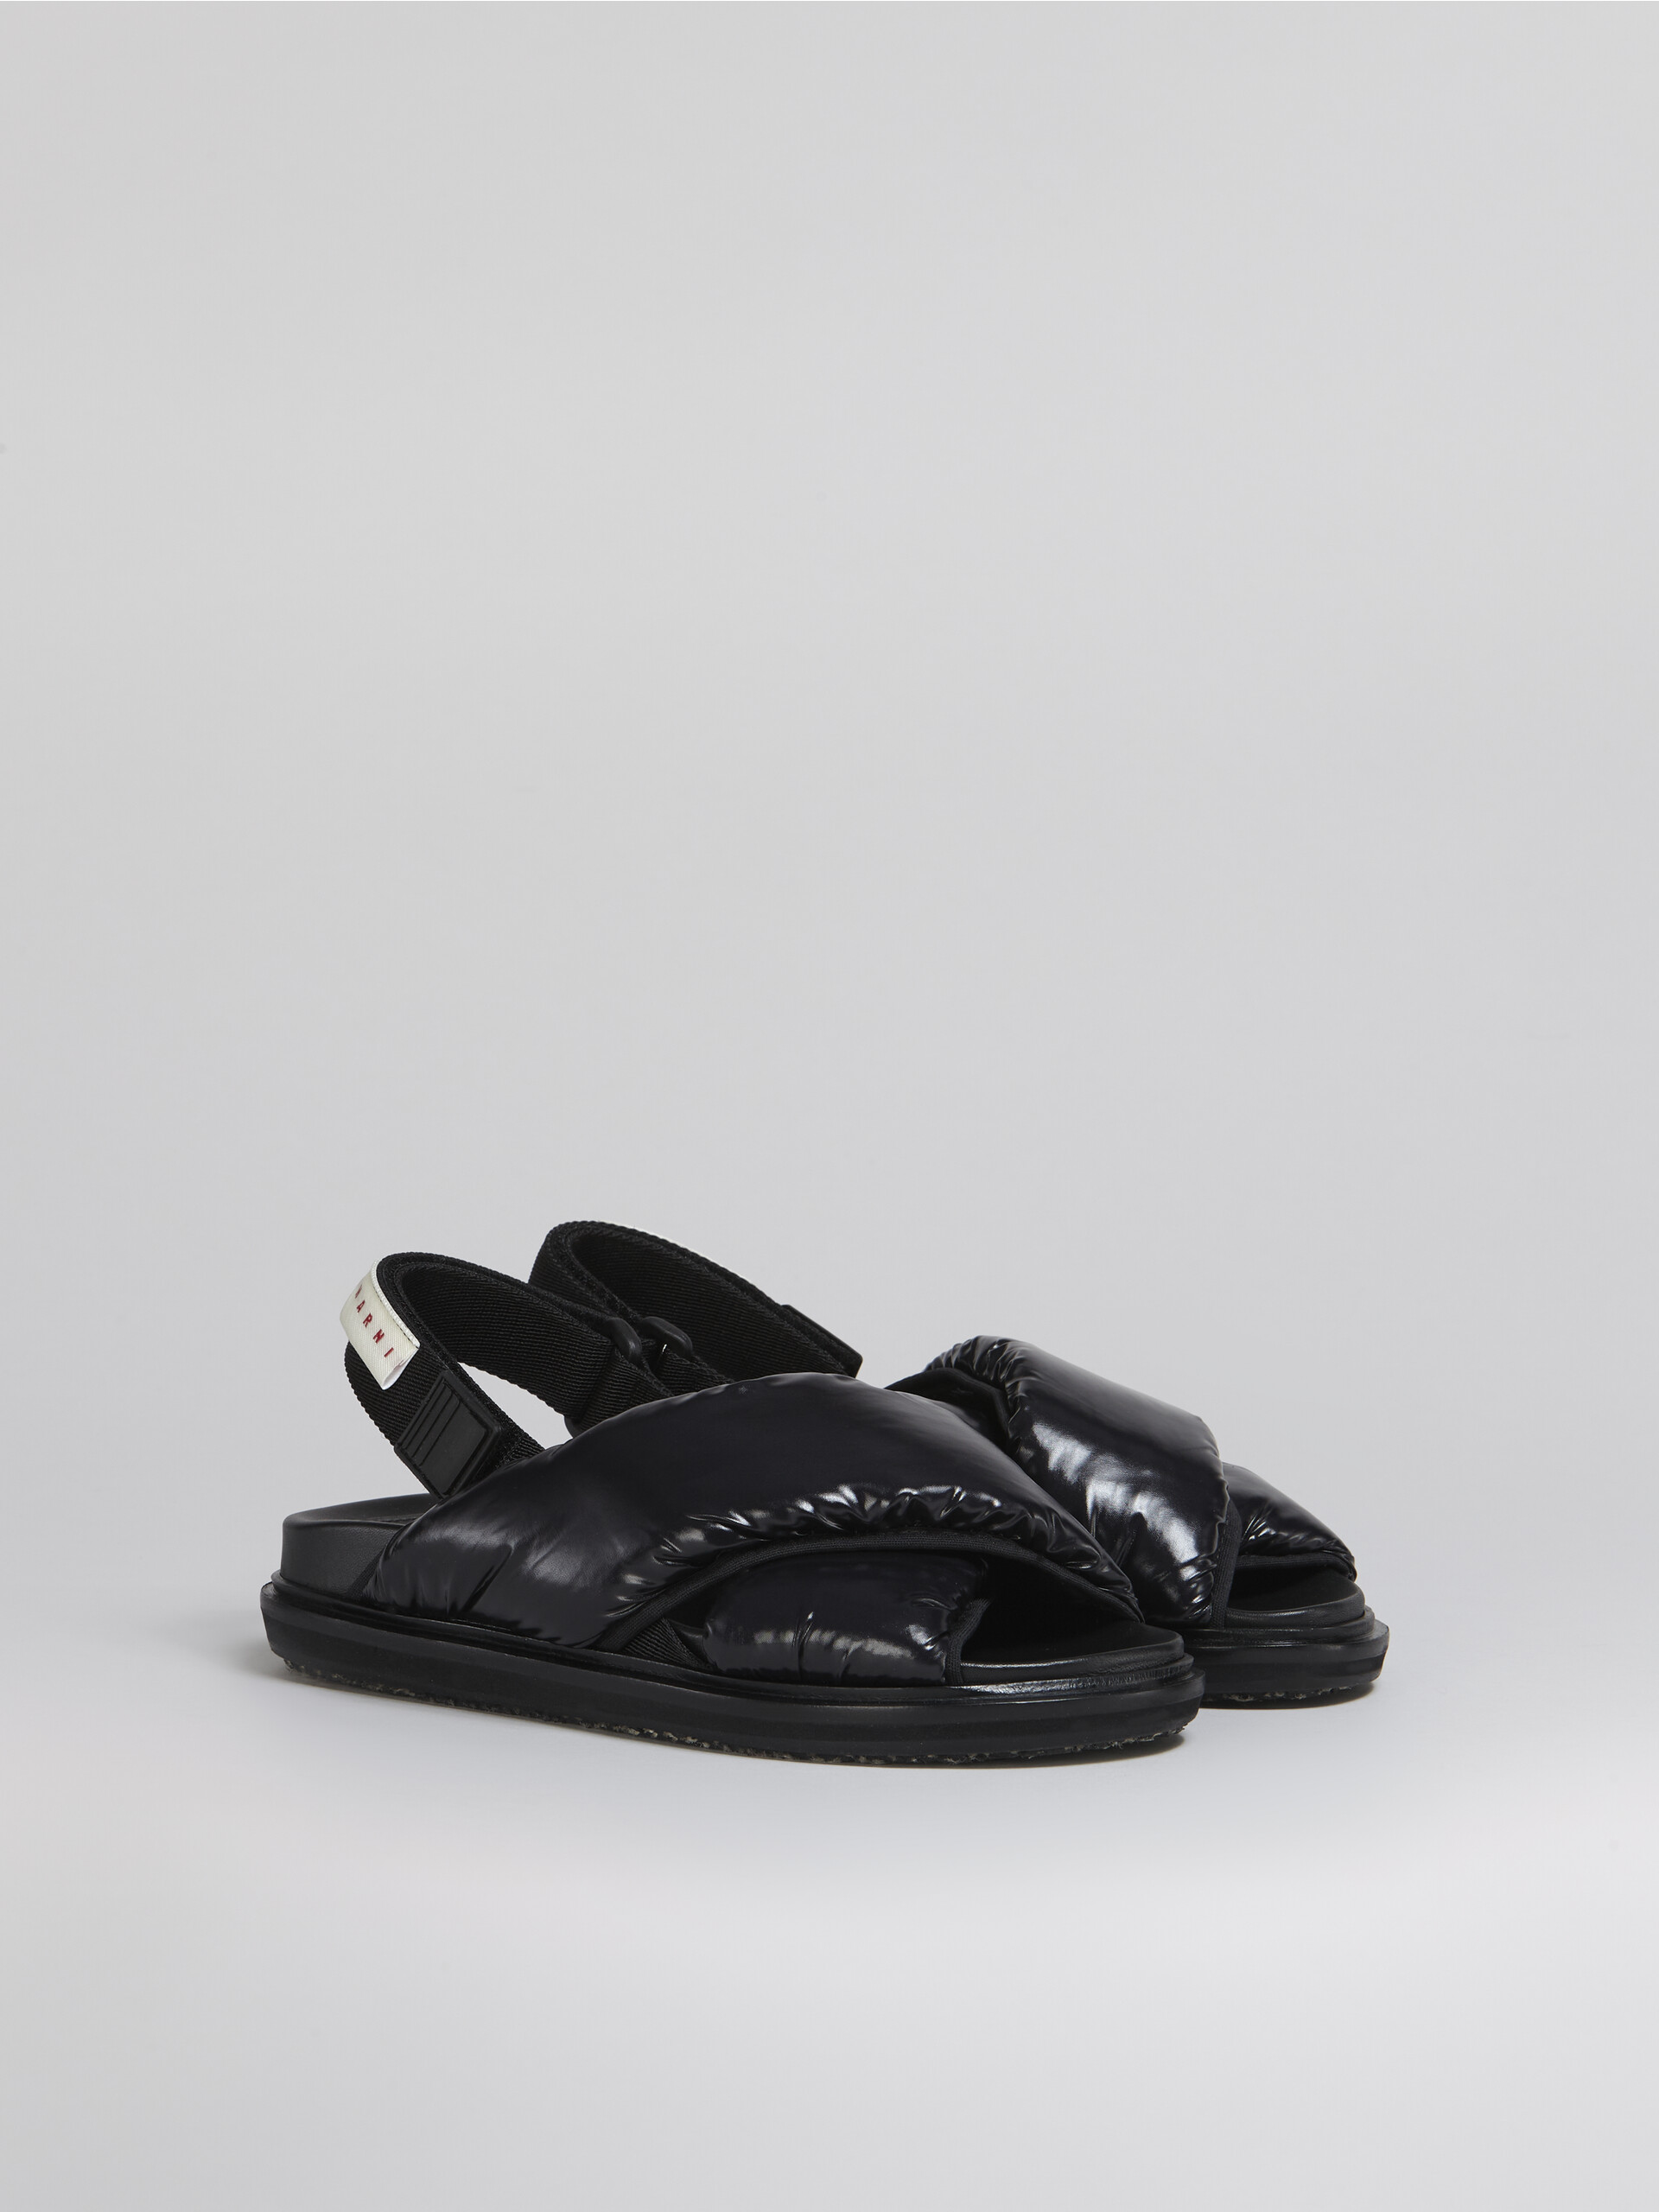 Black nylon criss-cross fussbett - Sandals - Image 2